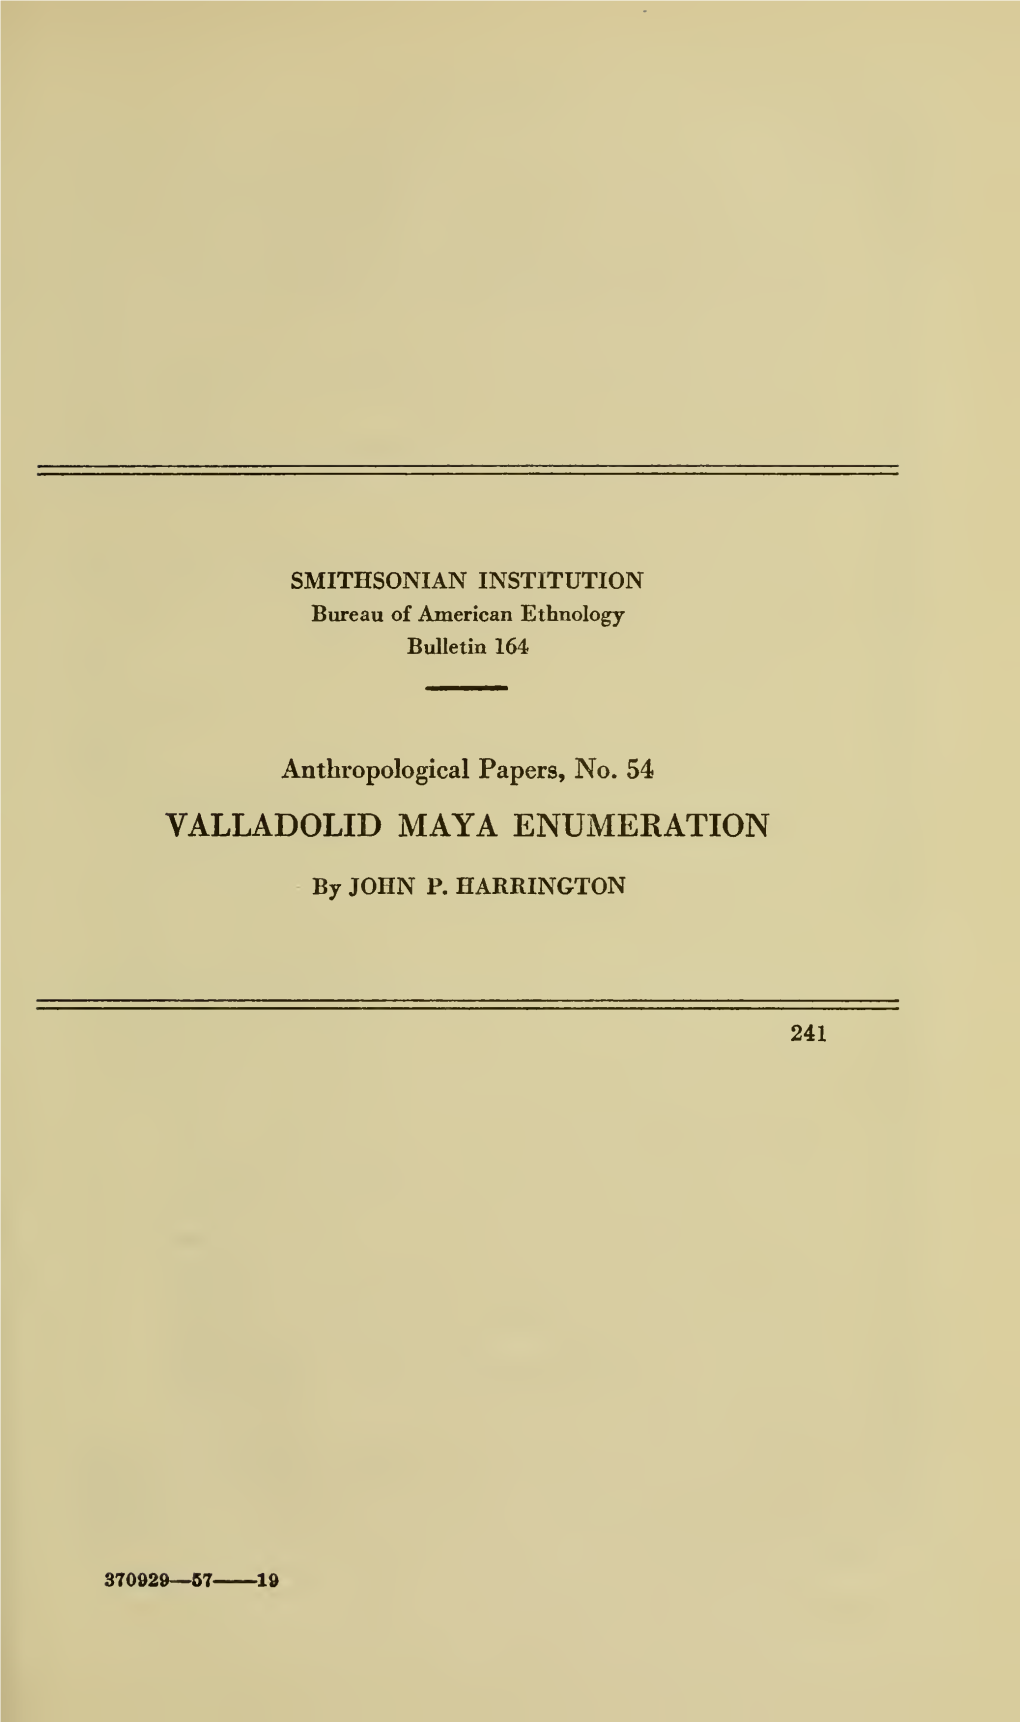 Valladolid Maya Enumeration